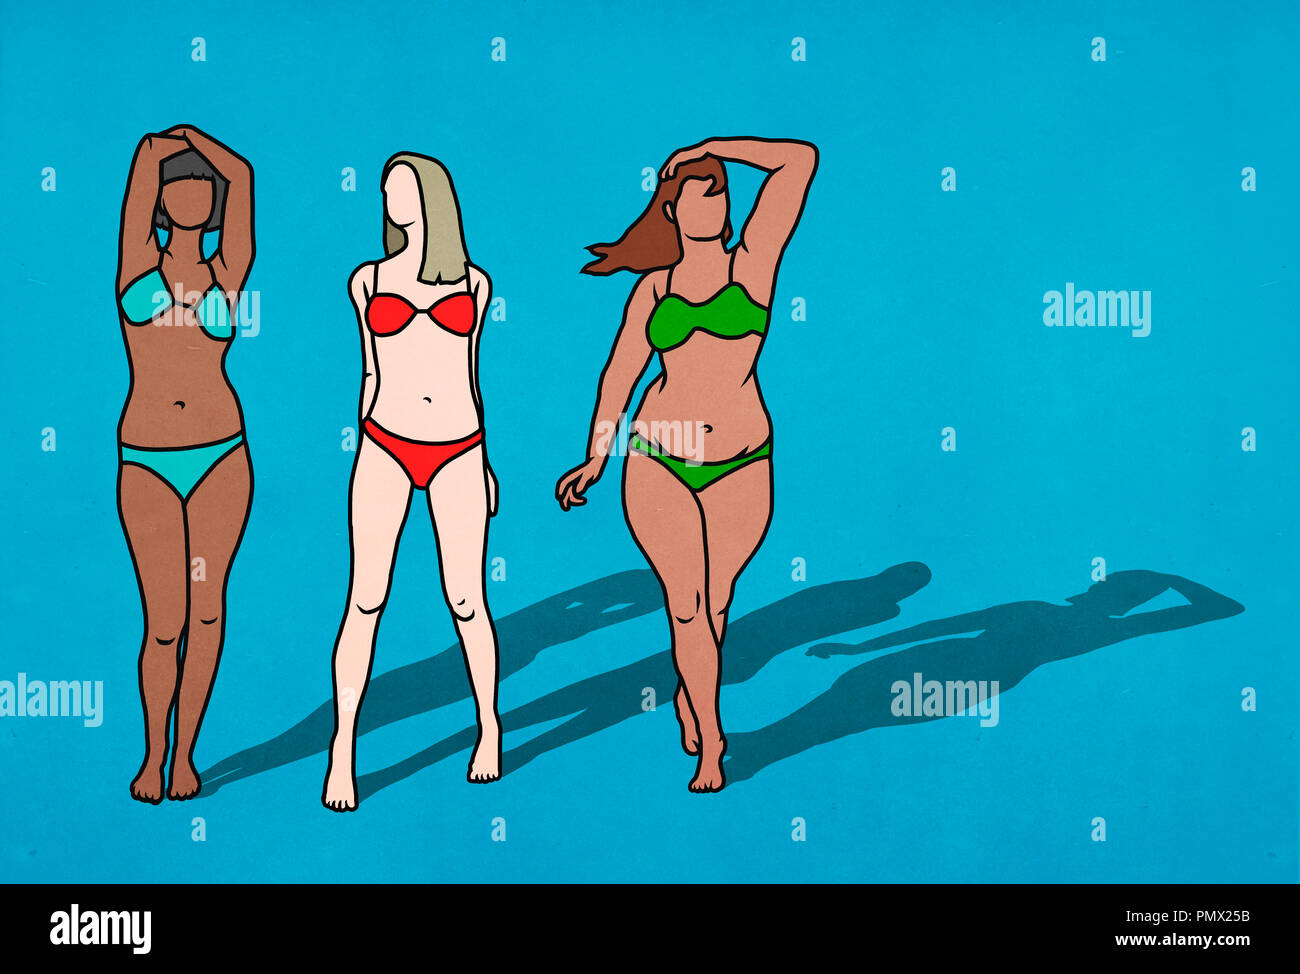 Bikini bodies hi-res stock and images - Alamy